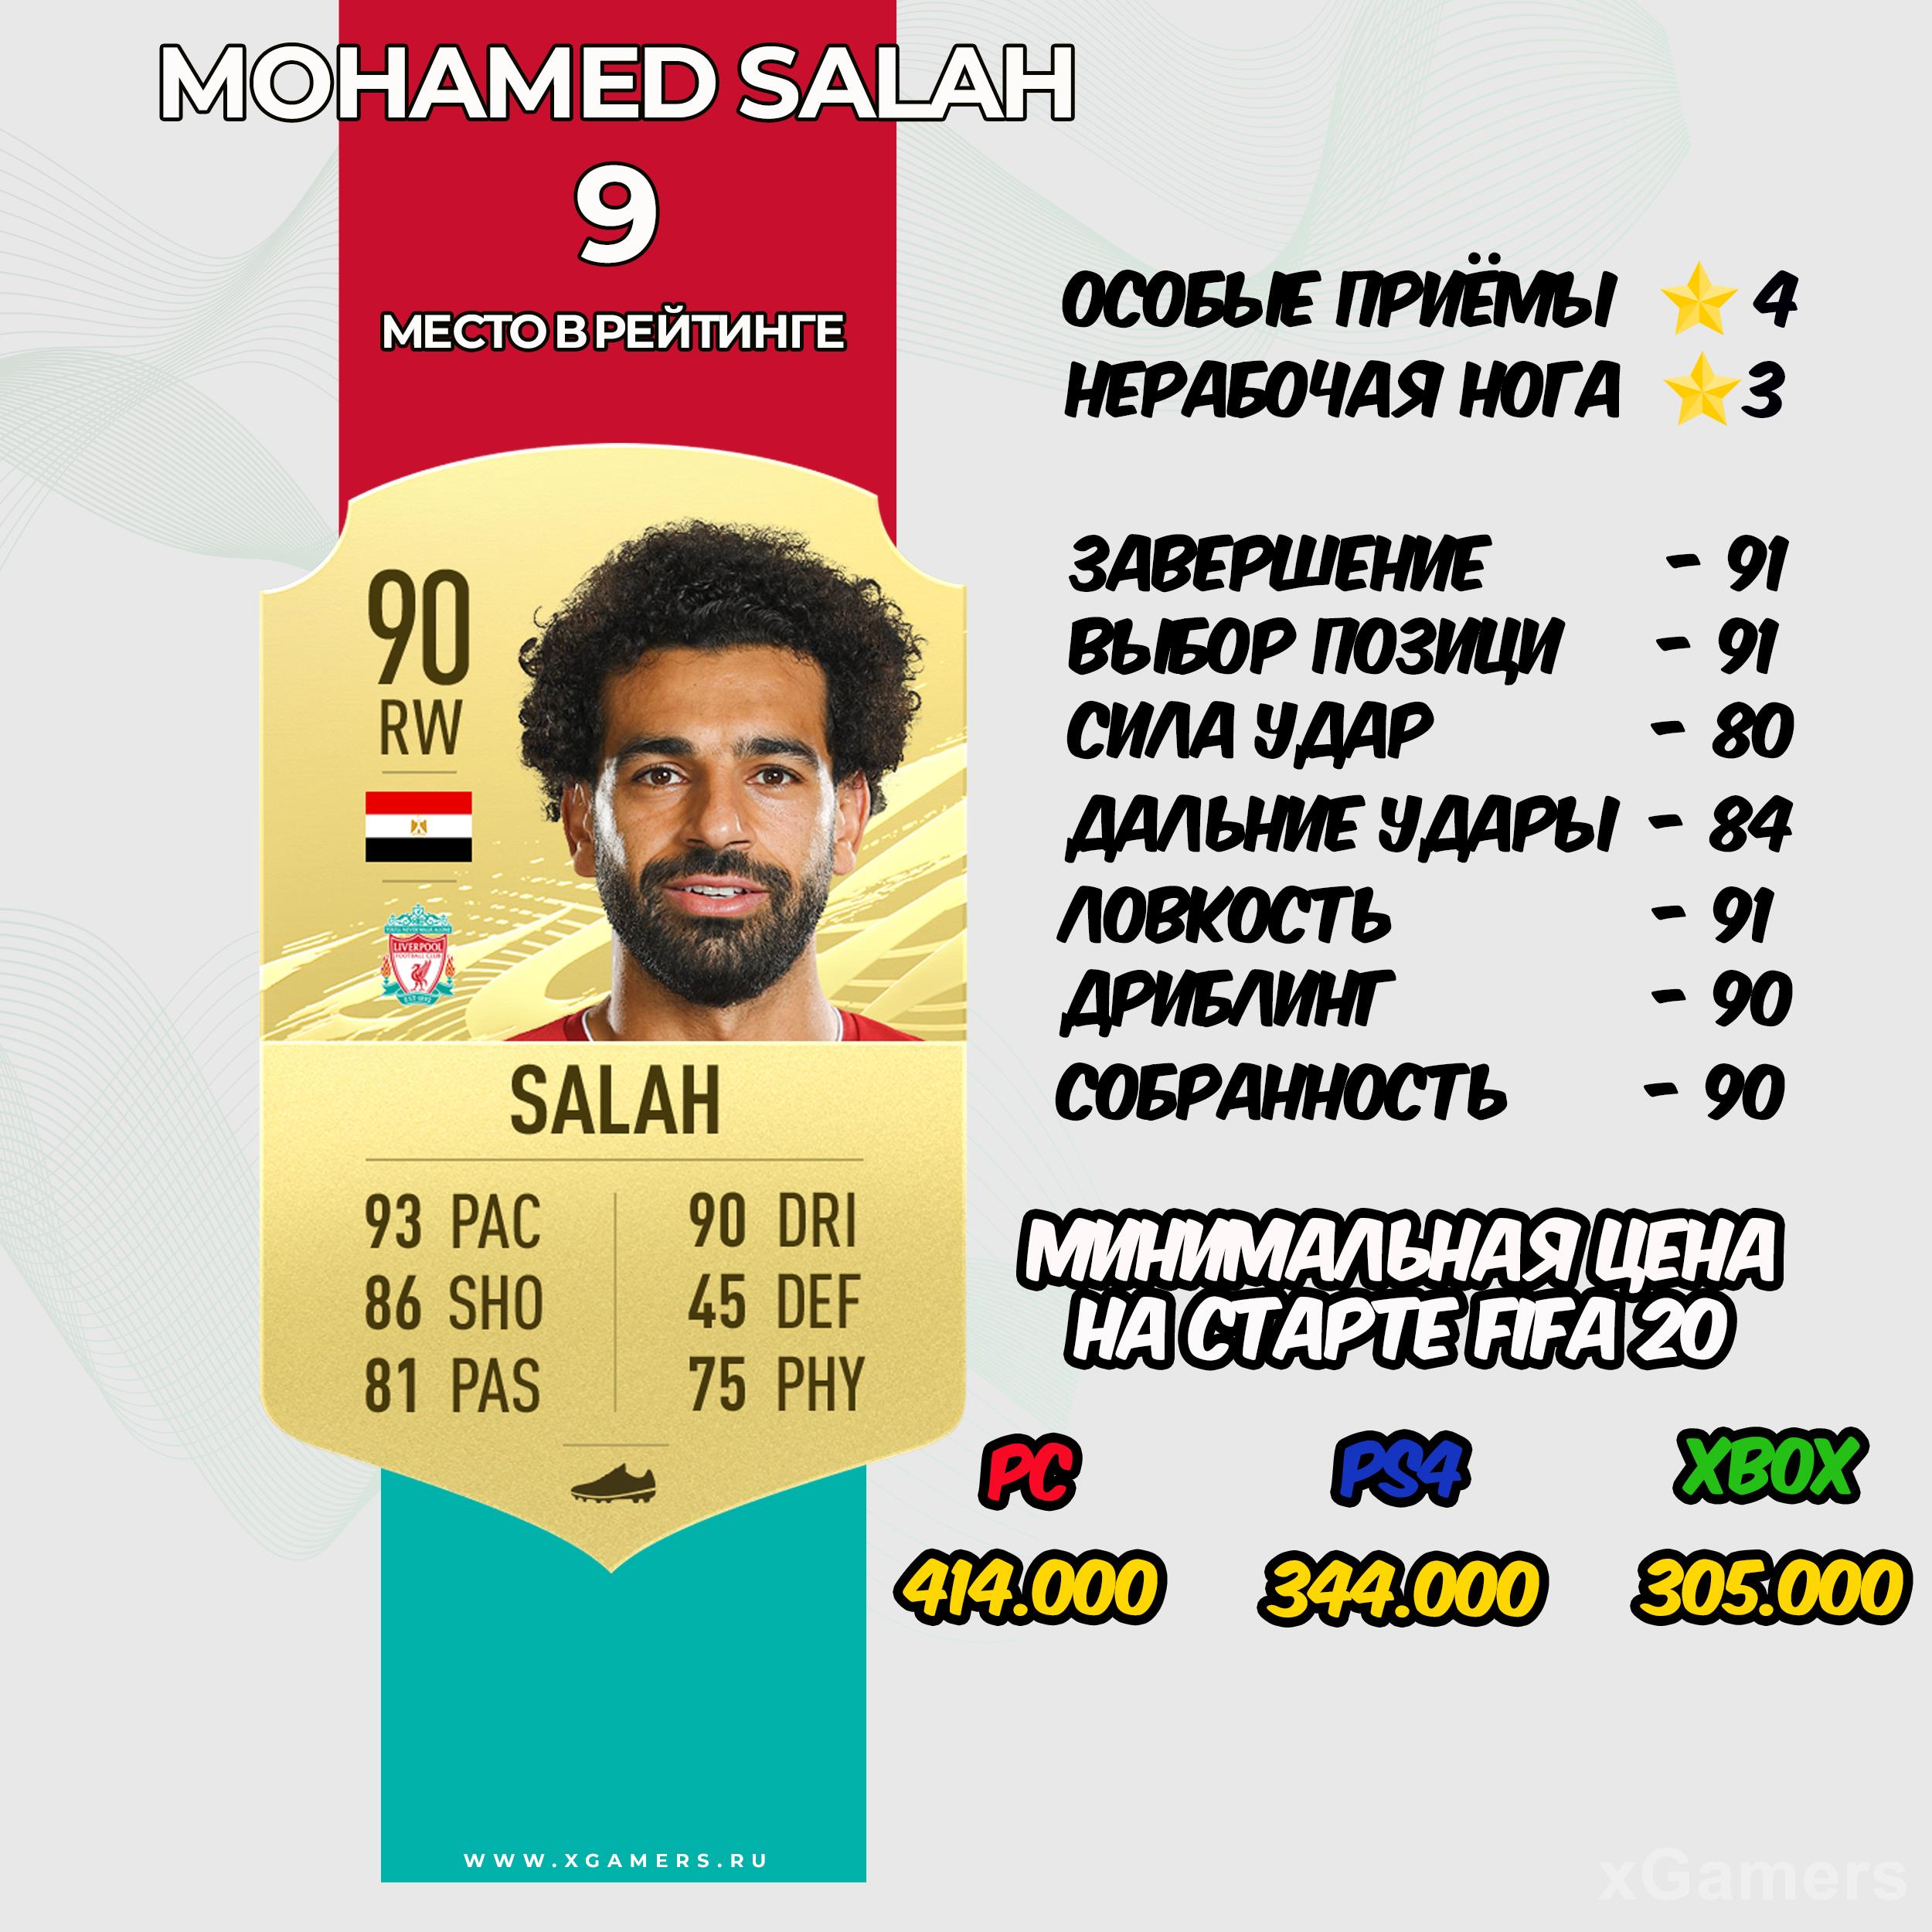 Mohamed Salah - место в рейтинге 9